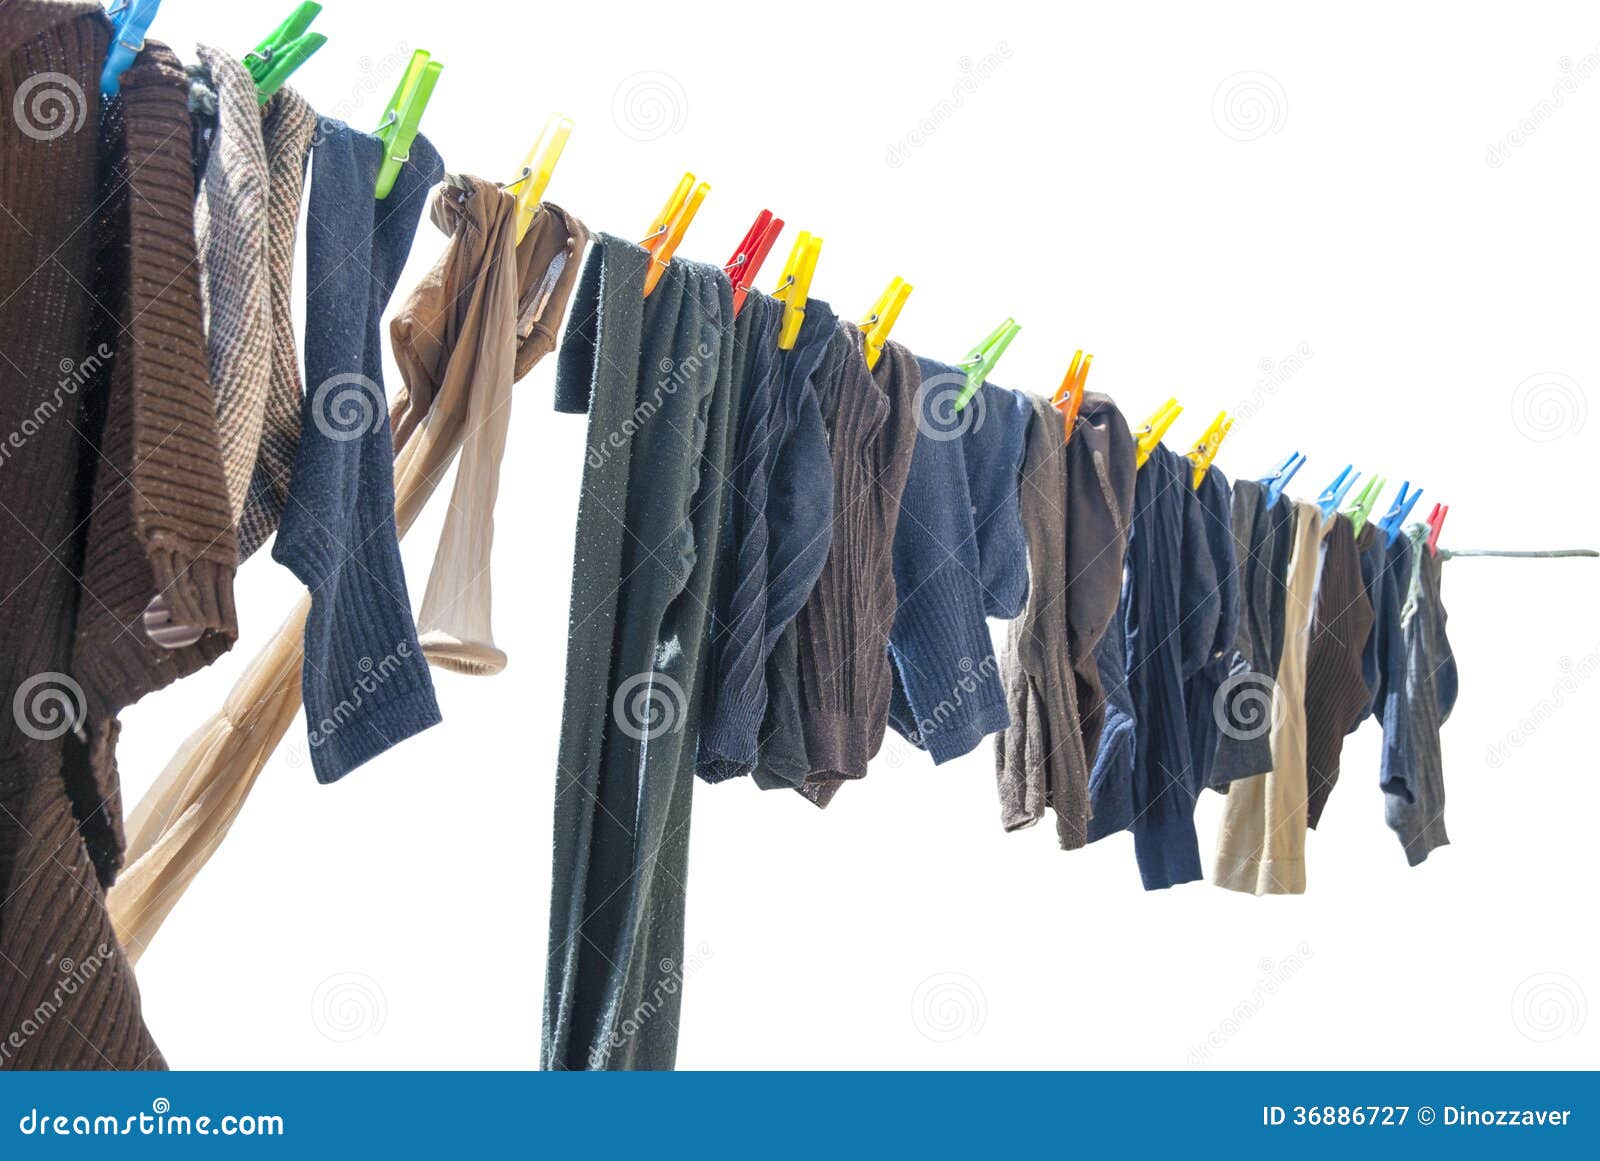 Socks Drying on Clothesline, Isolated on White Stock Image - Image of ...